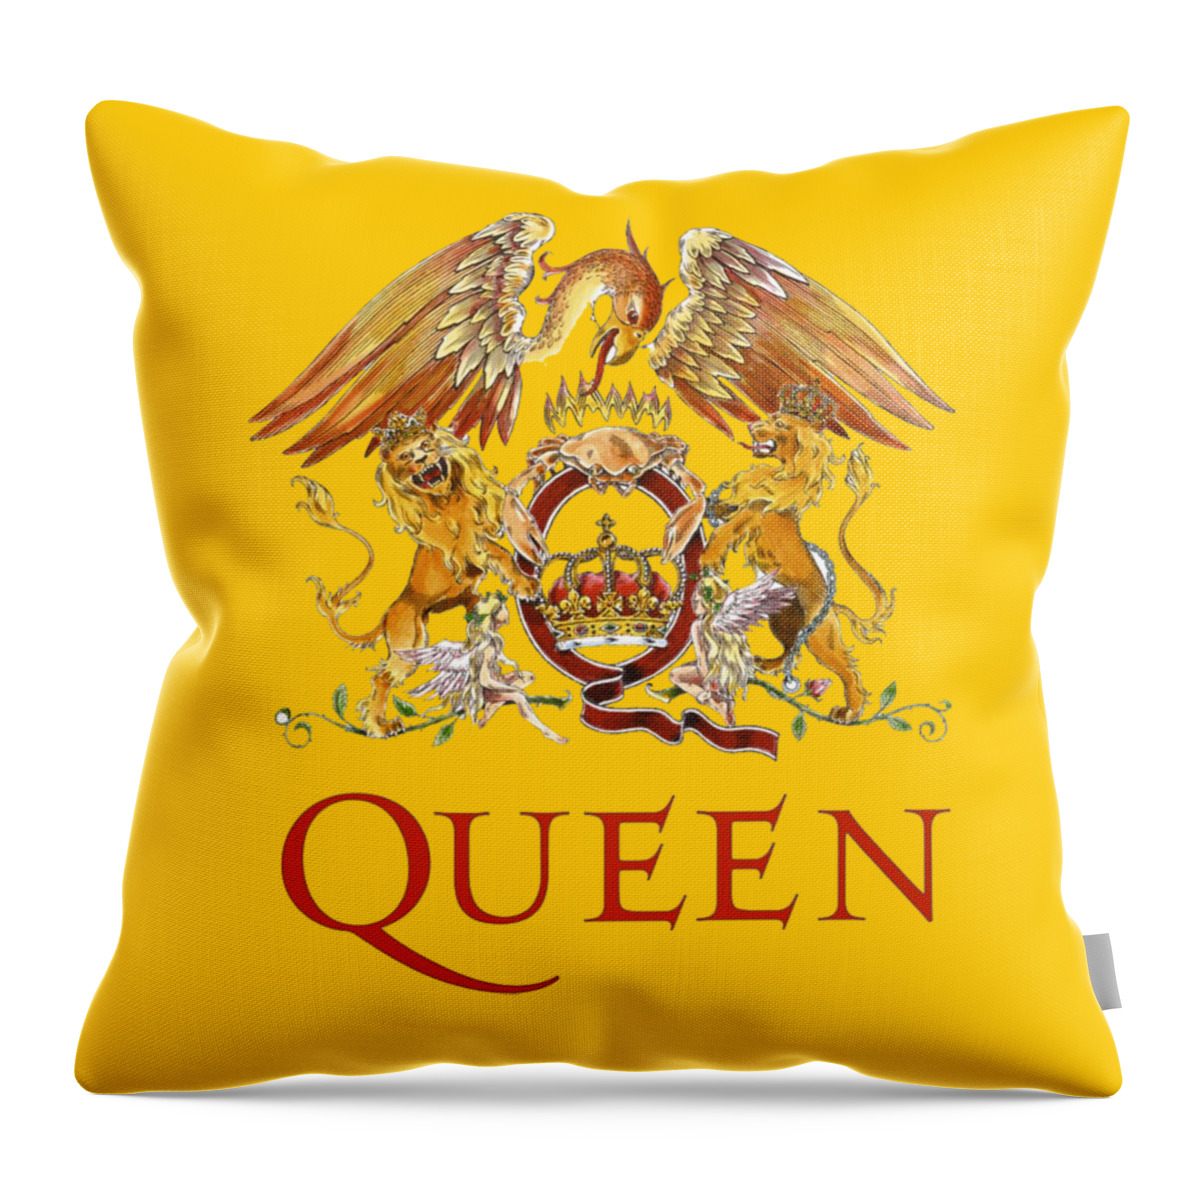 Queen Throw Pillow featuring the digital art Queen logo by Sally Ayad